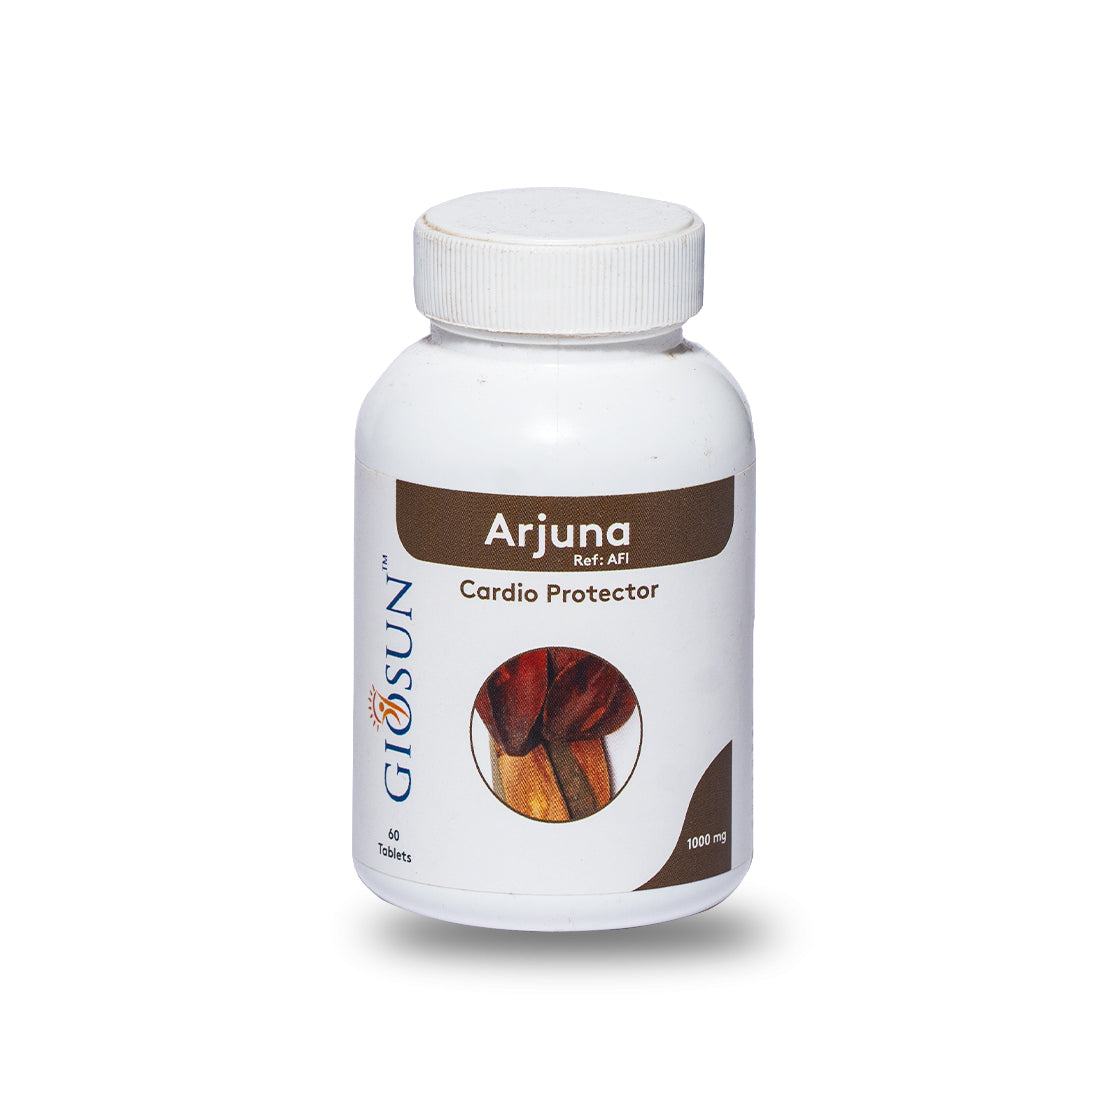 Arjuna Capsules - Promote Heart Health, Manage Cholesterol & Metabolism (60 Capsules - 500/1000mg)